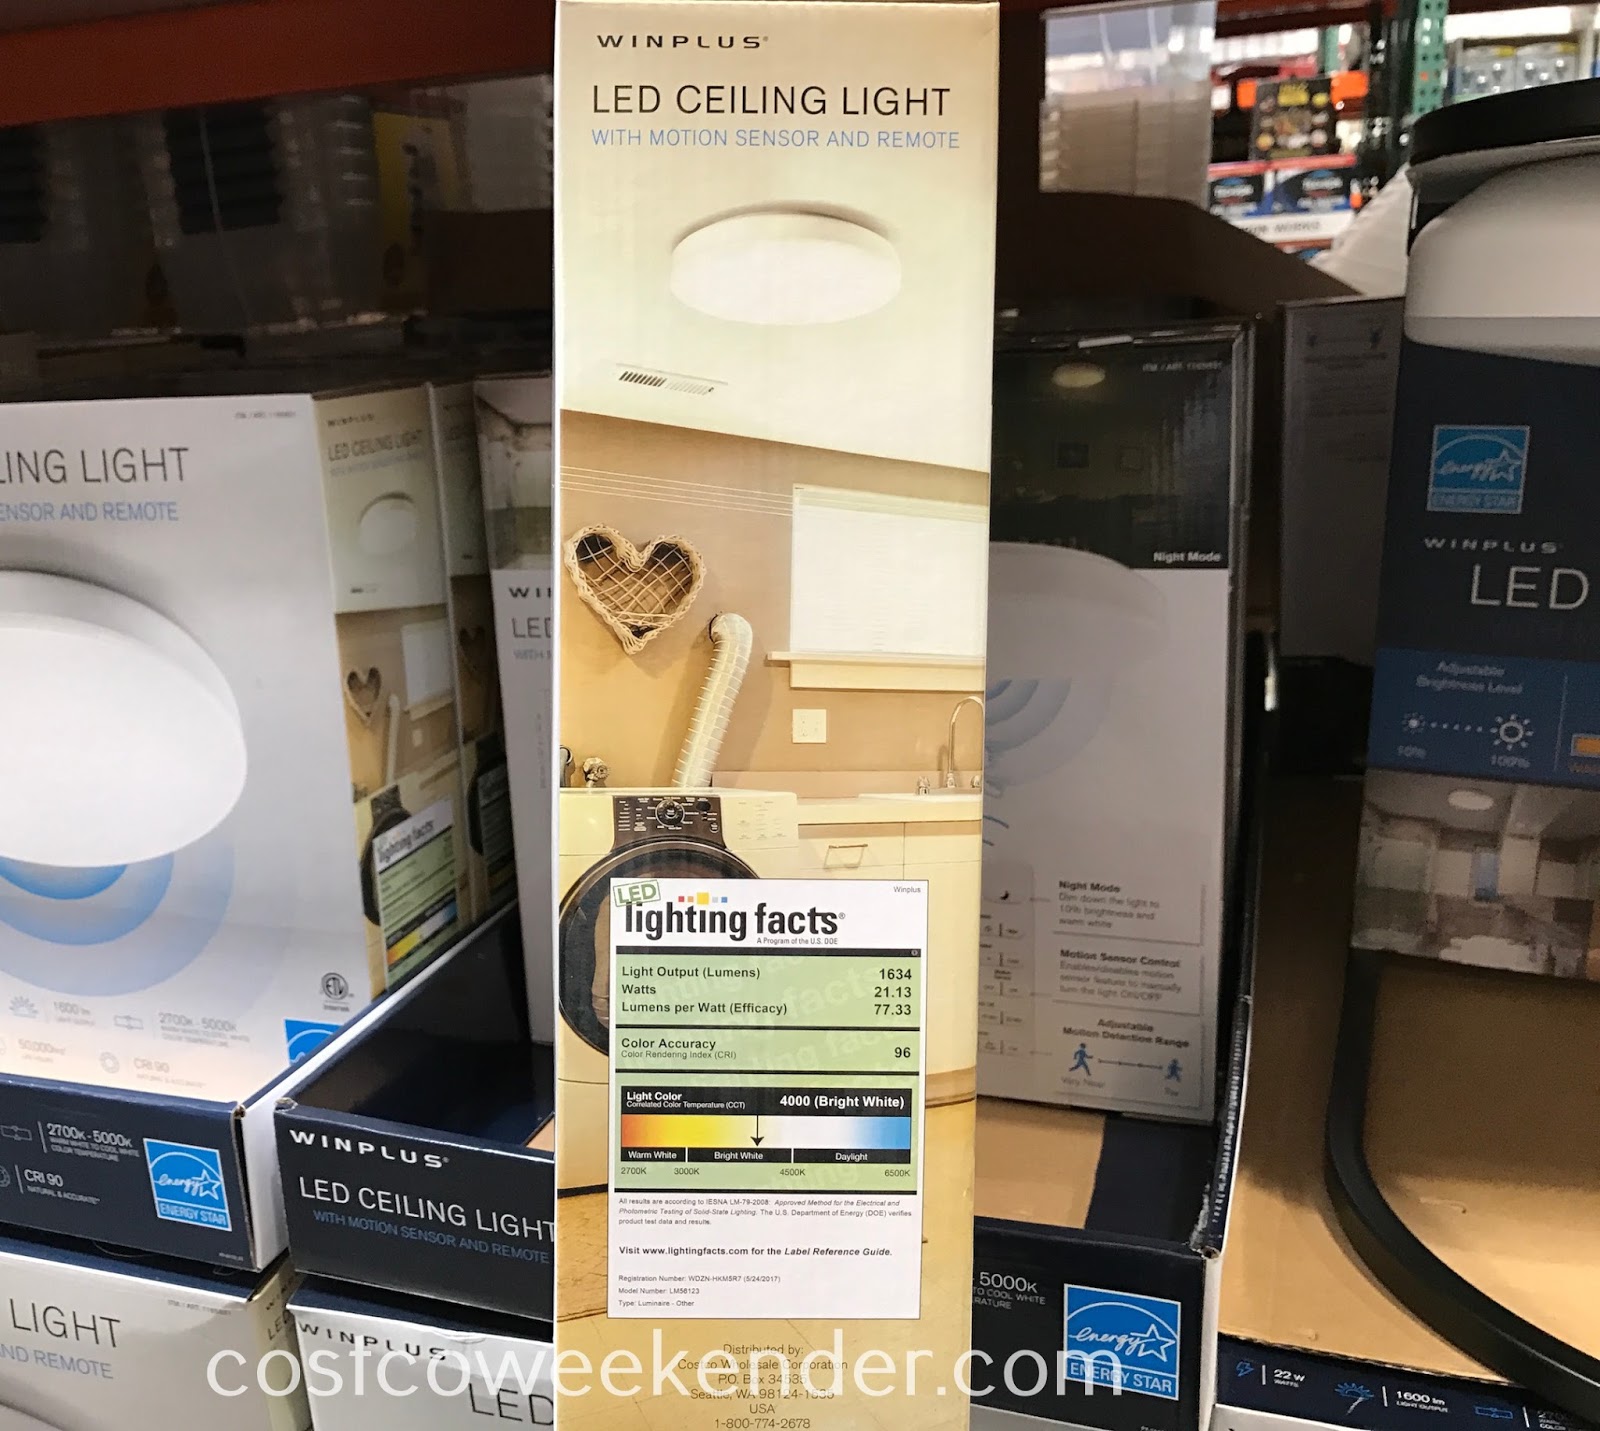 WinPlus LED Ceiling Light with Motion Sensor Previously #kA3 